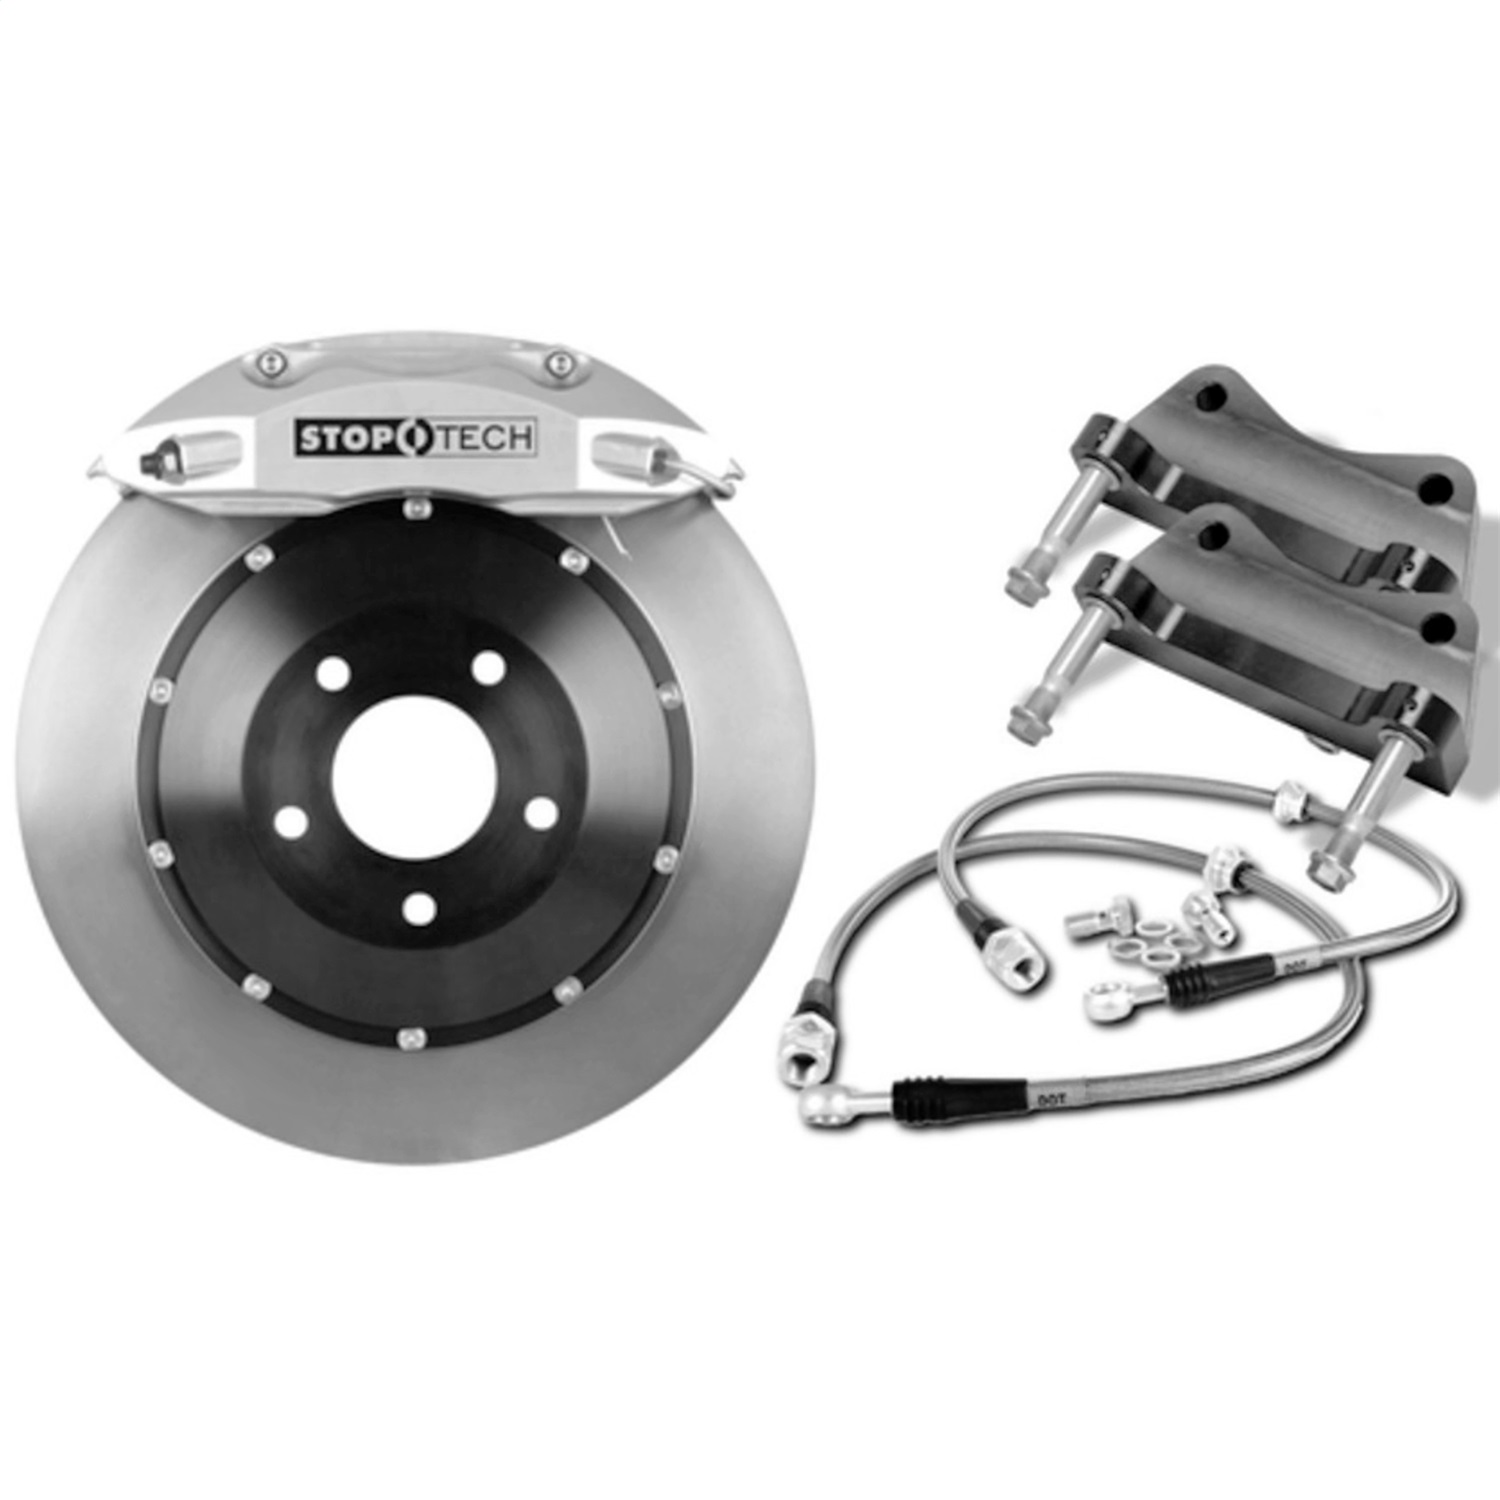 StopTech 83.521.0047.24 Big Brake Kit w/2 Piece Rotor Fits 02-10 SC430